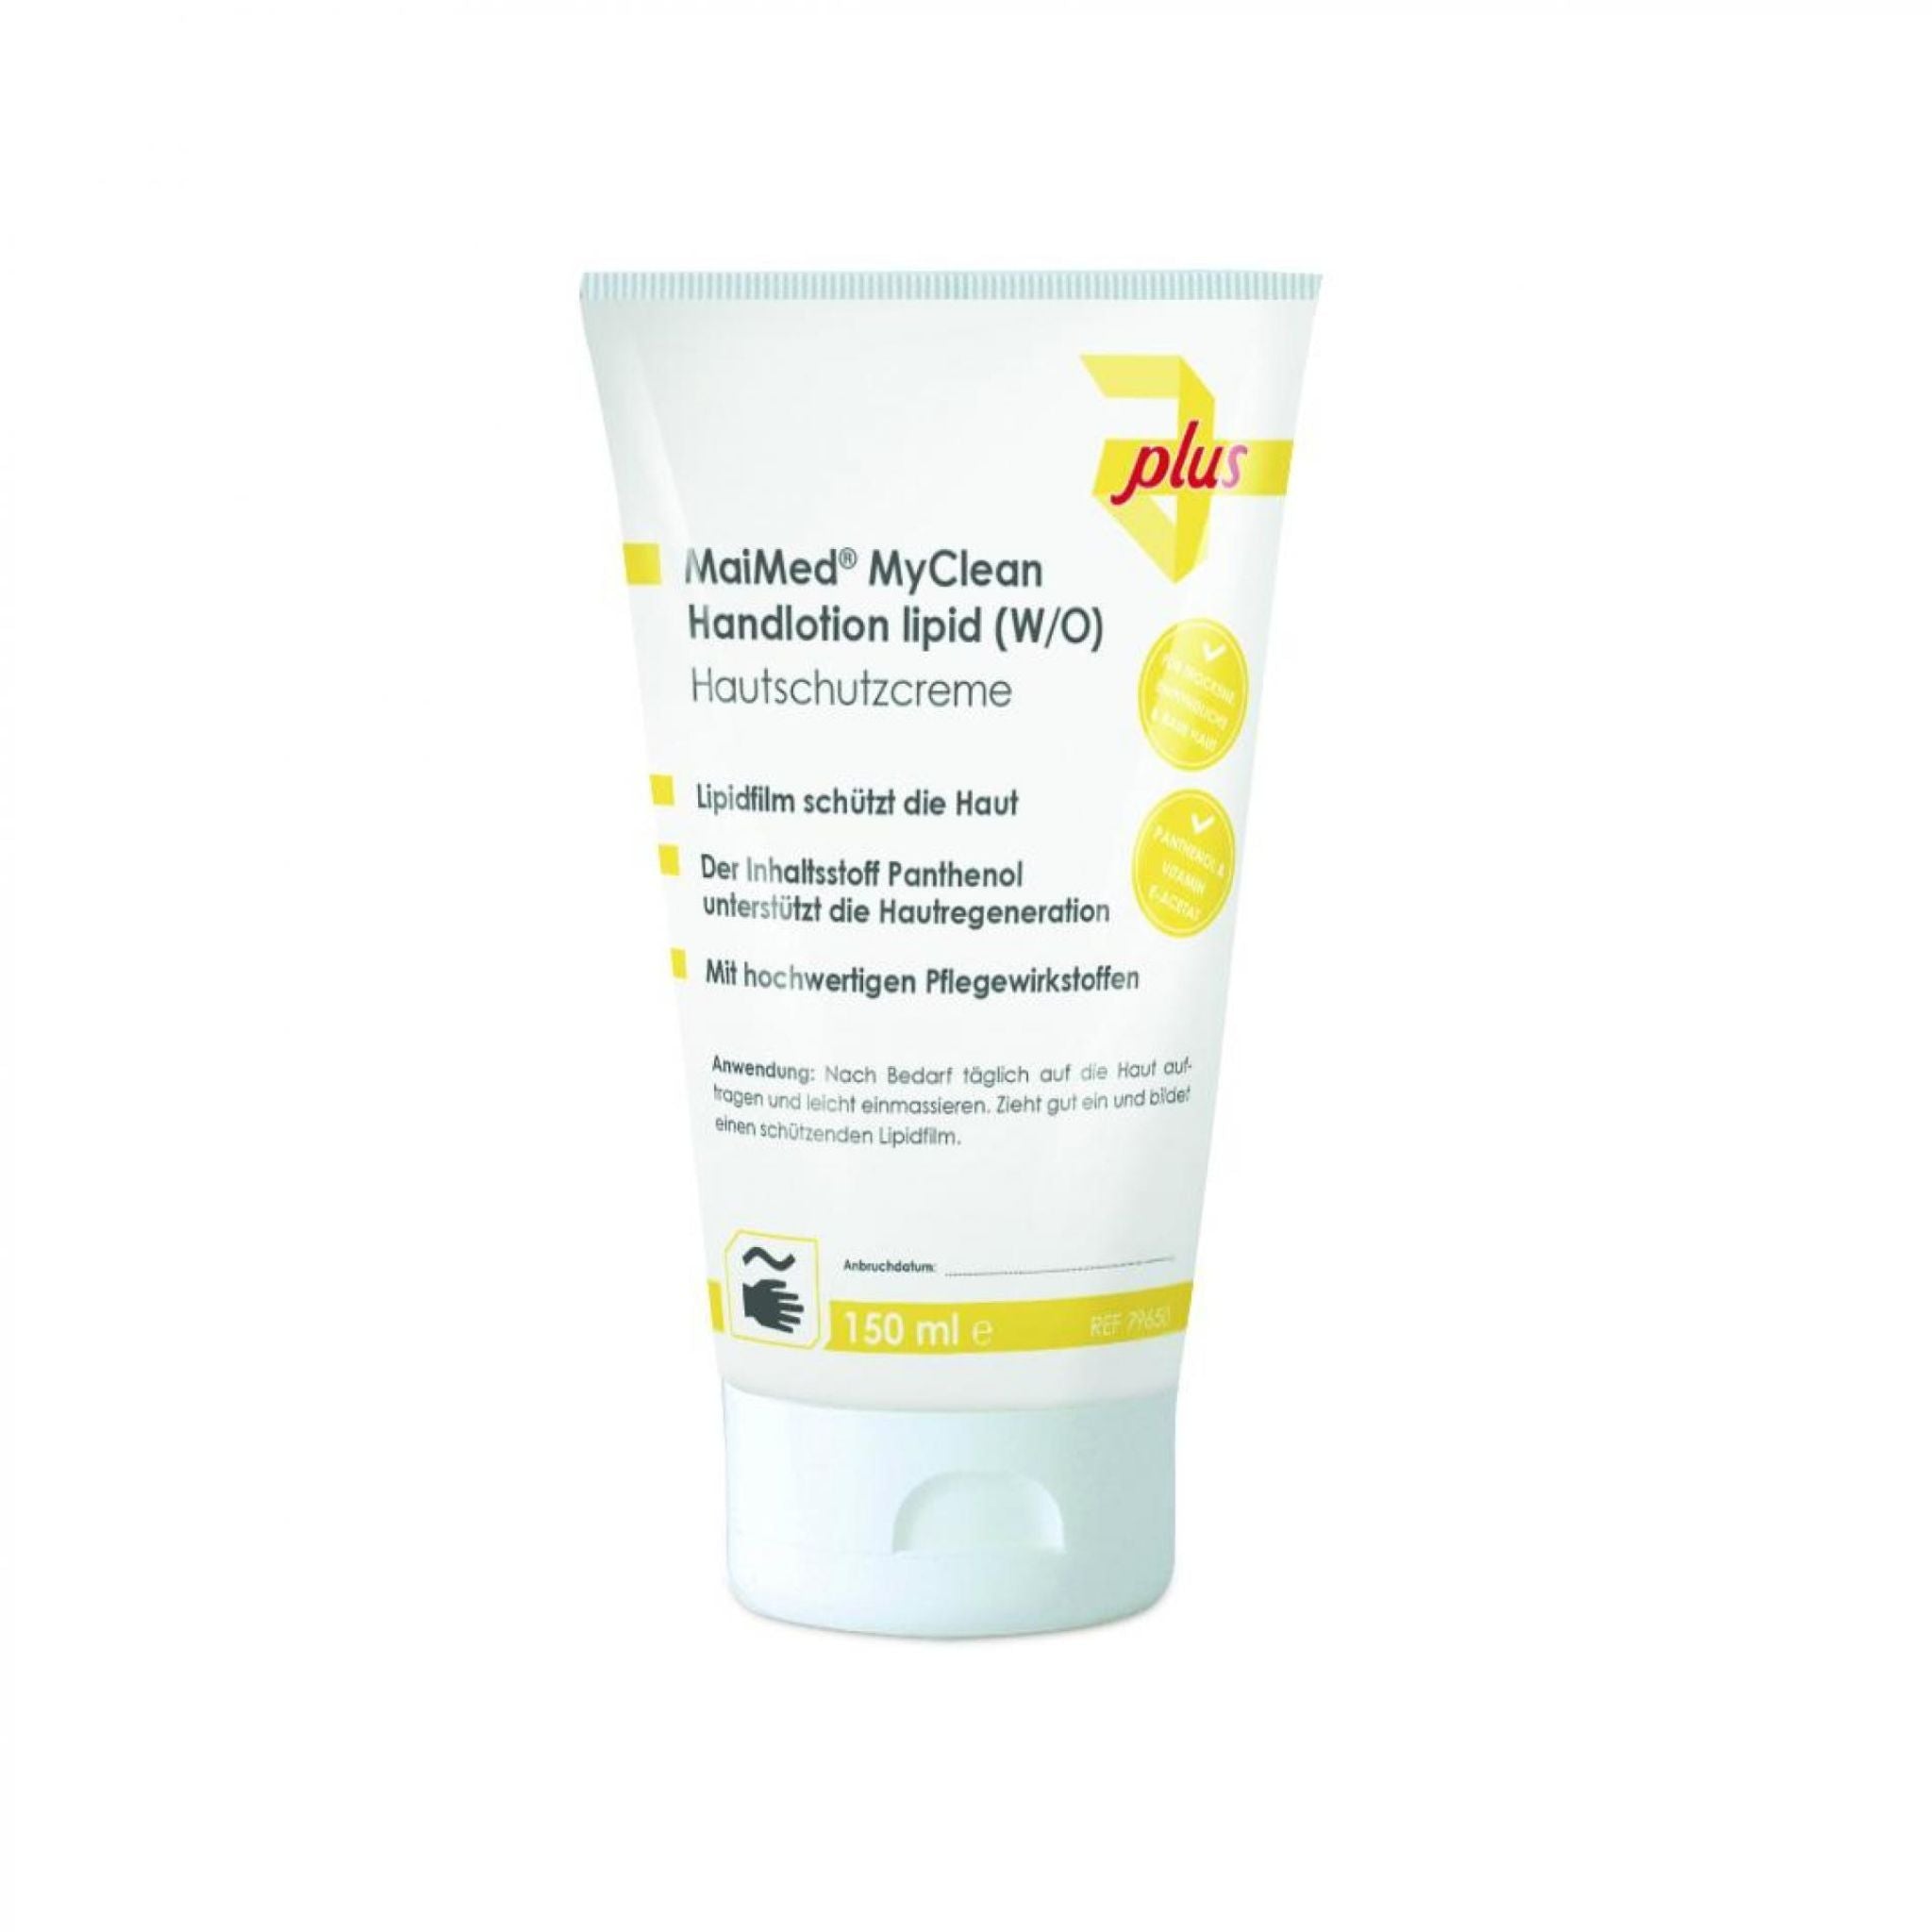 Maimed MyClean skin protection cream (W/O)